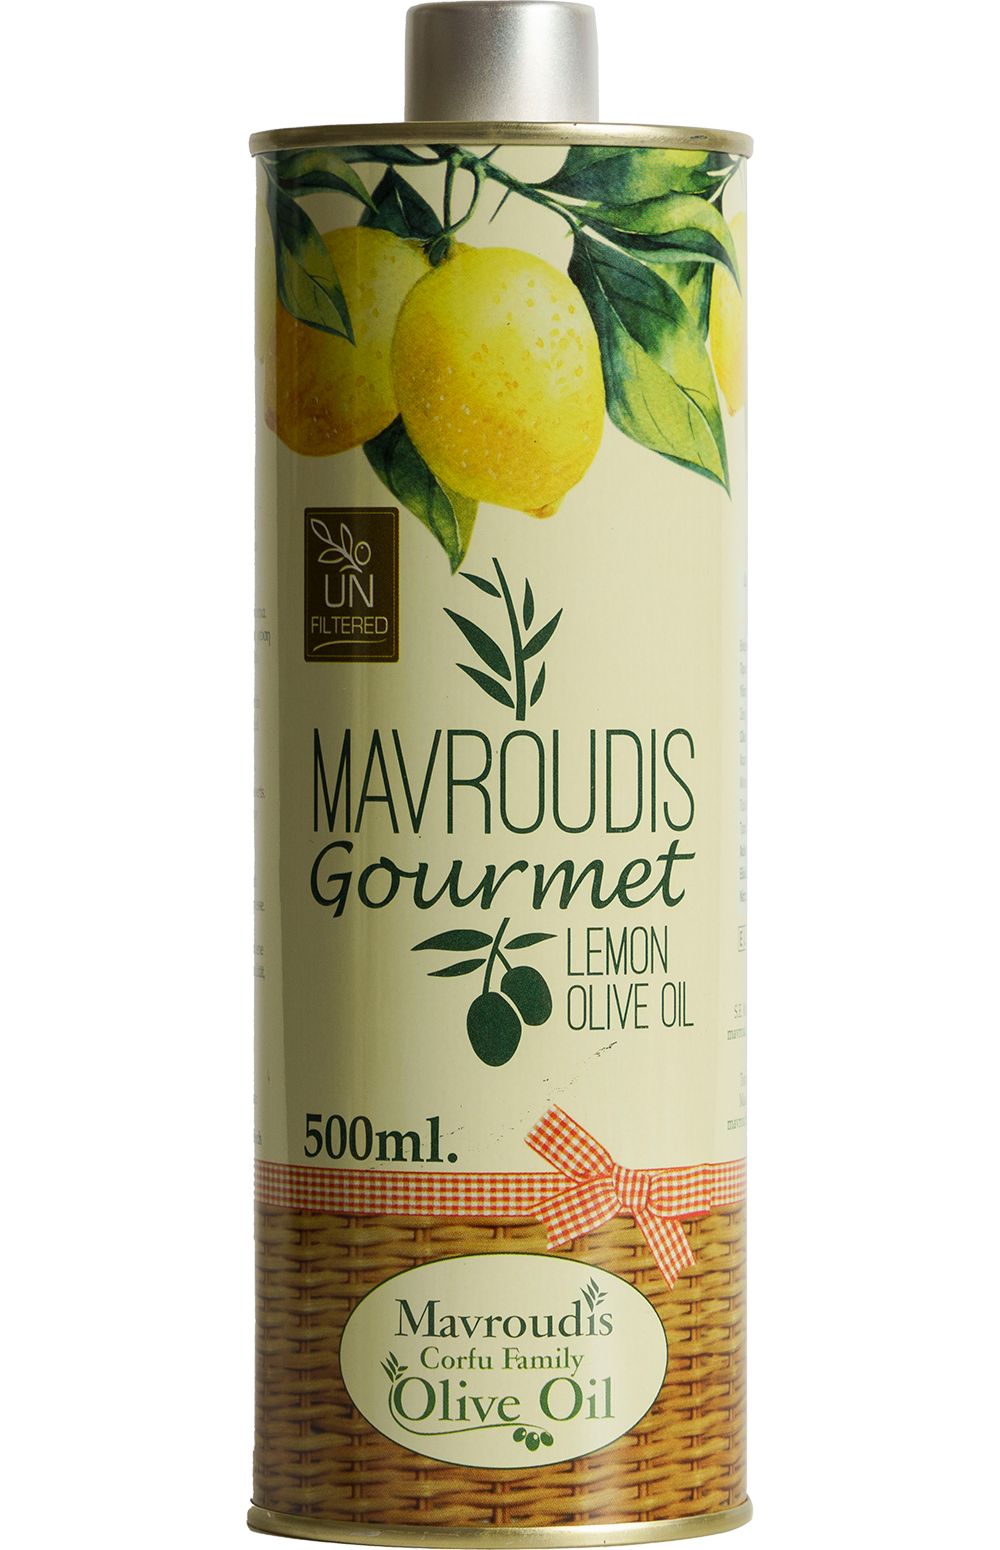 Mavroudis Gourmet Lemon